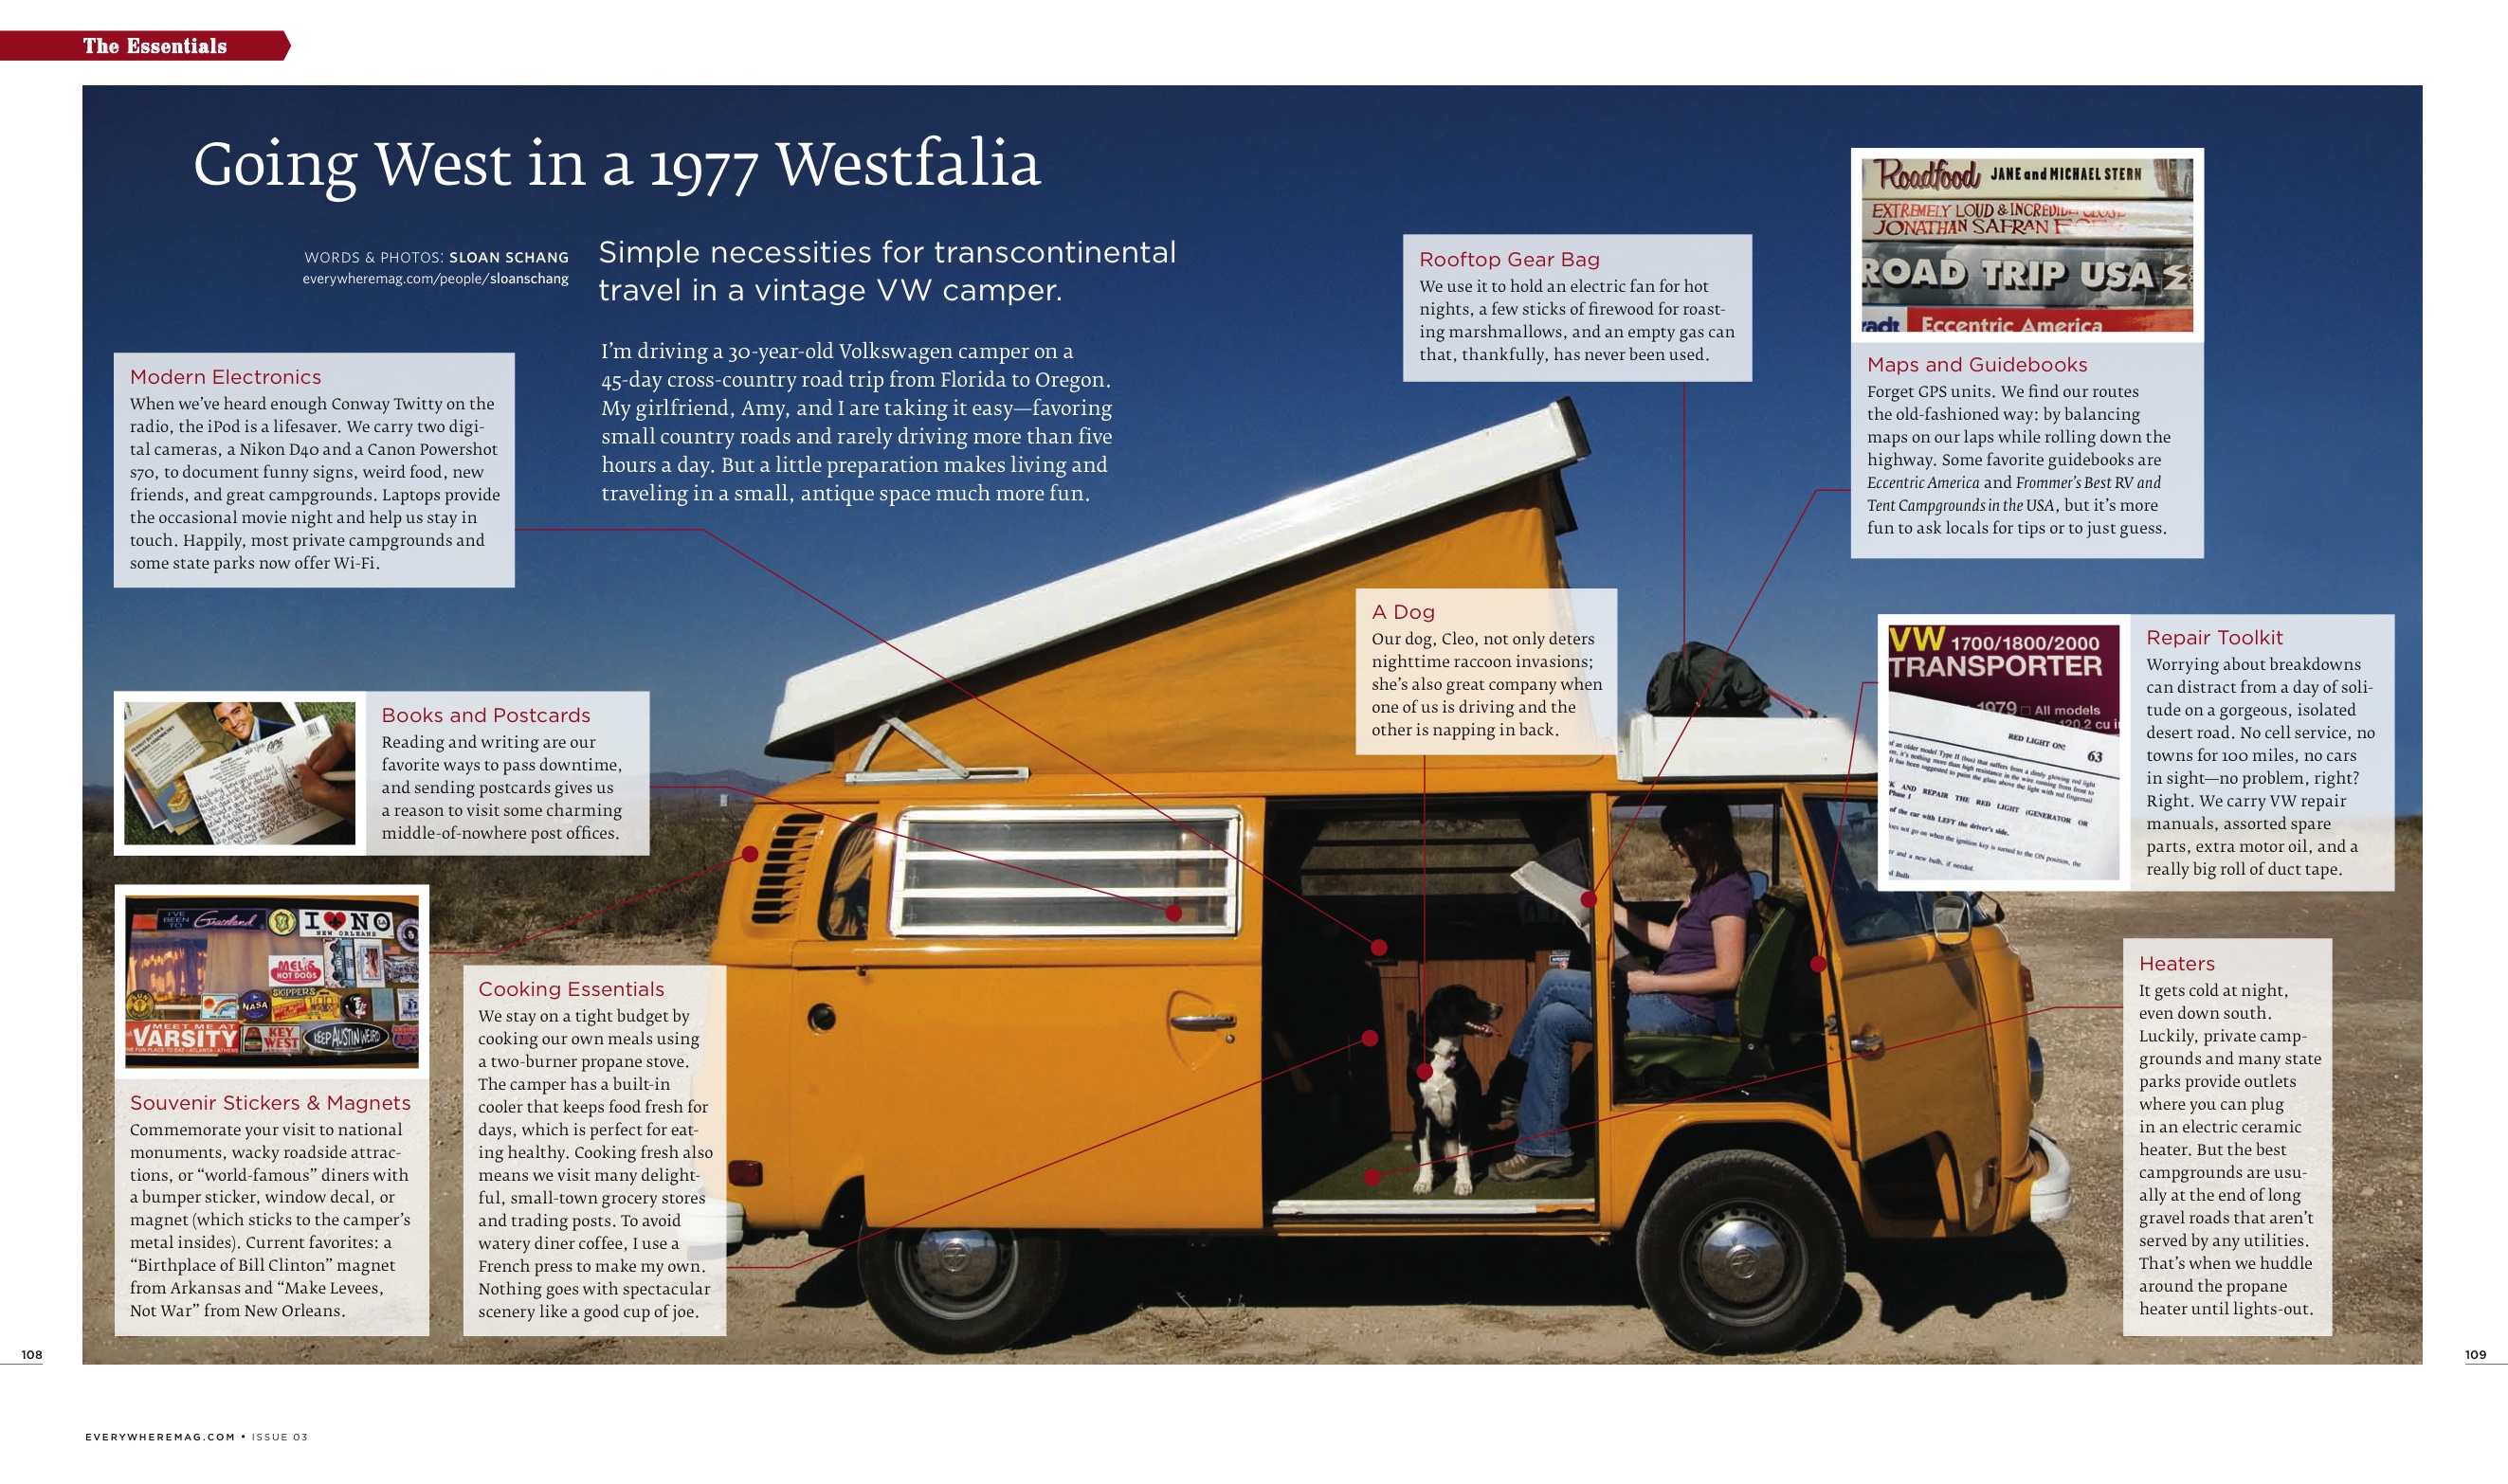 to pack a vintage Volkswagen Westfalia camper for trans-America travel: